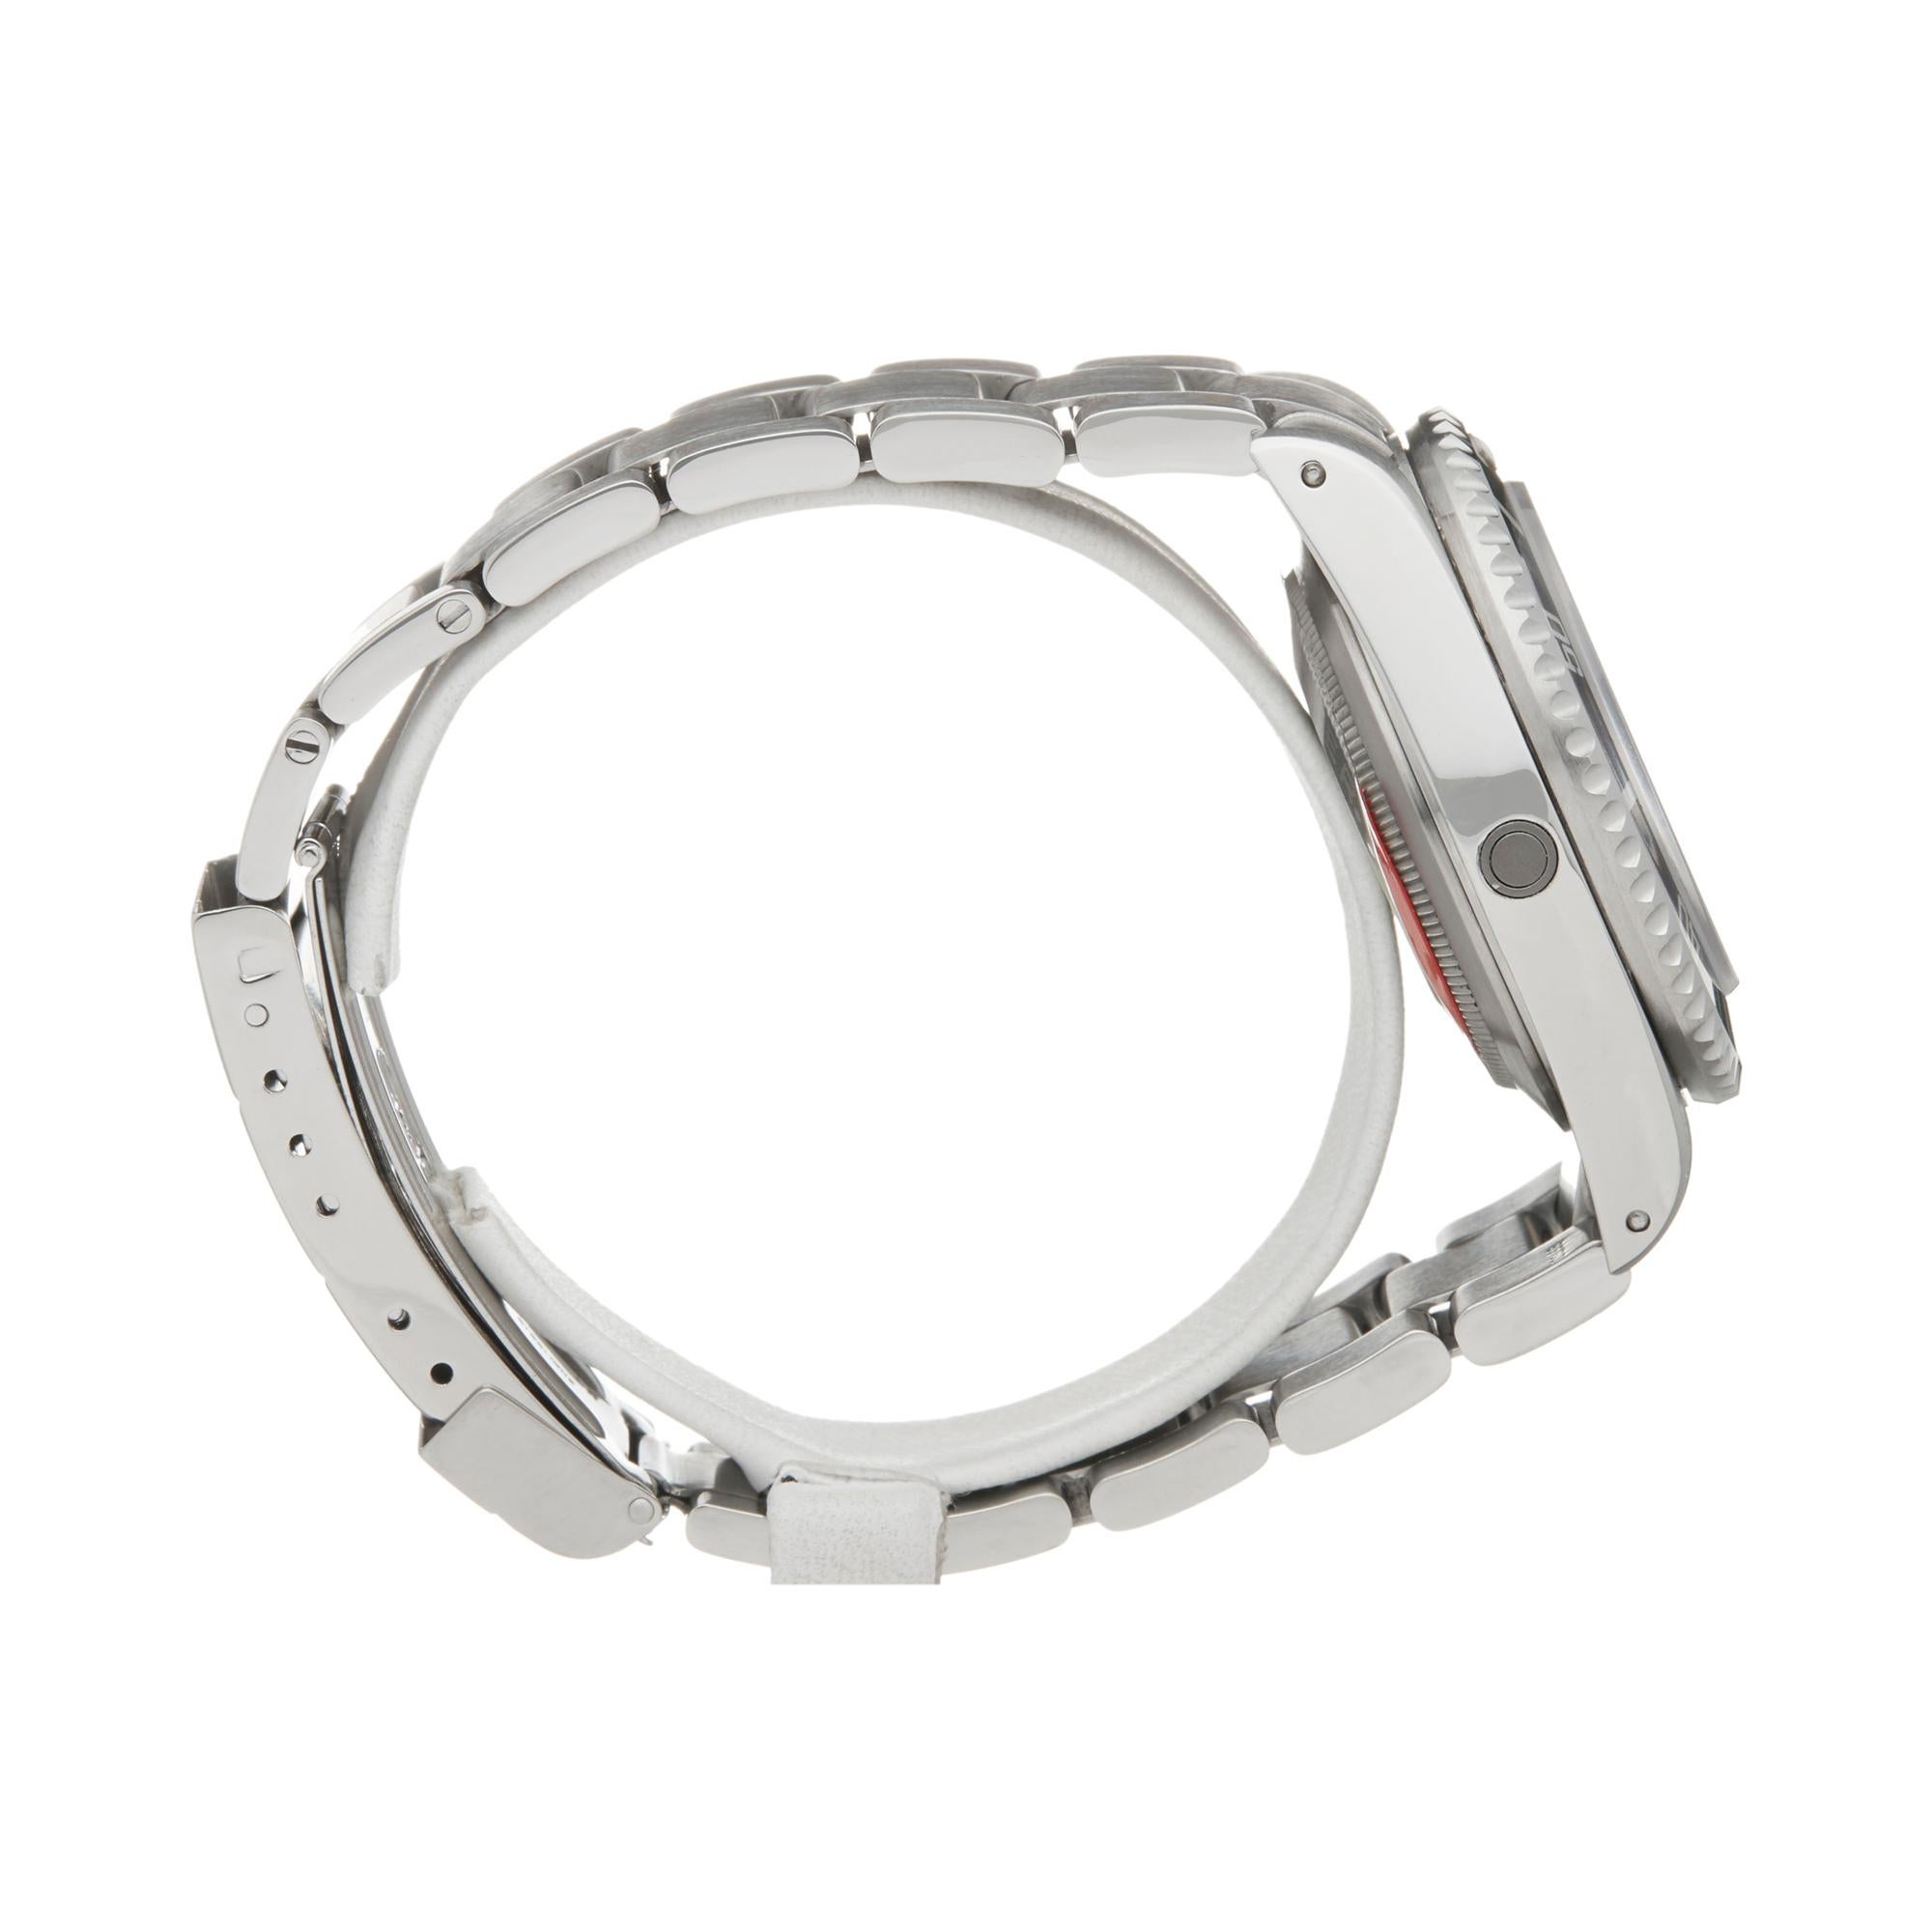 Rolex Sea-Dweller Stainless Steel 16660 Wristwatch 1